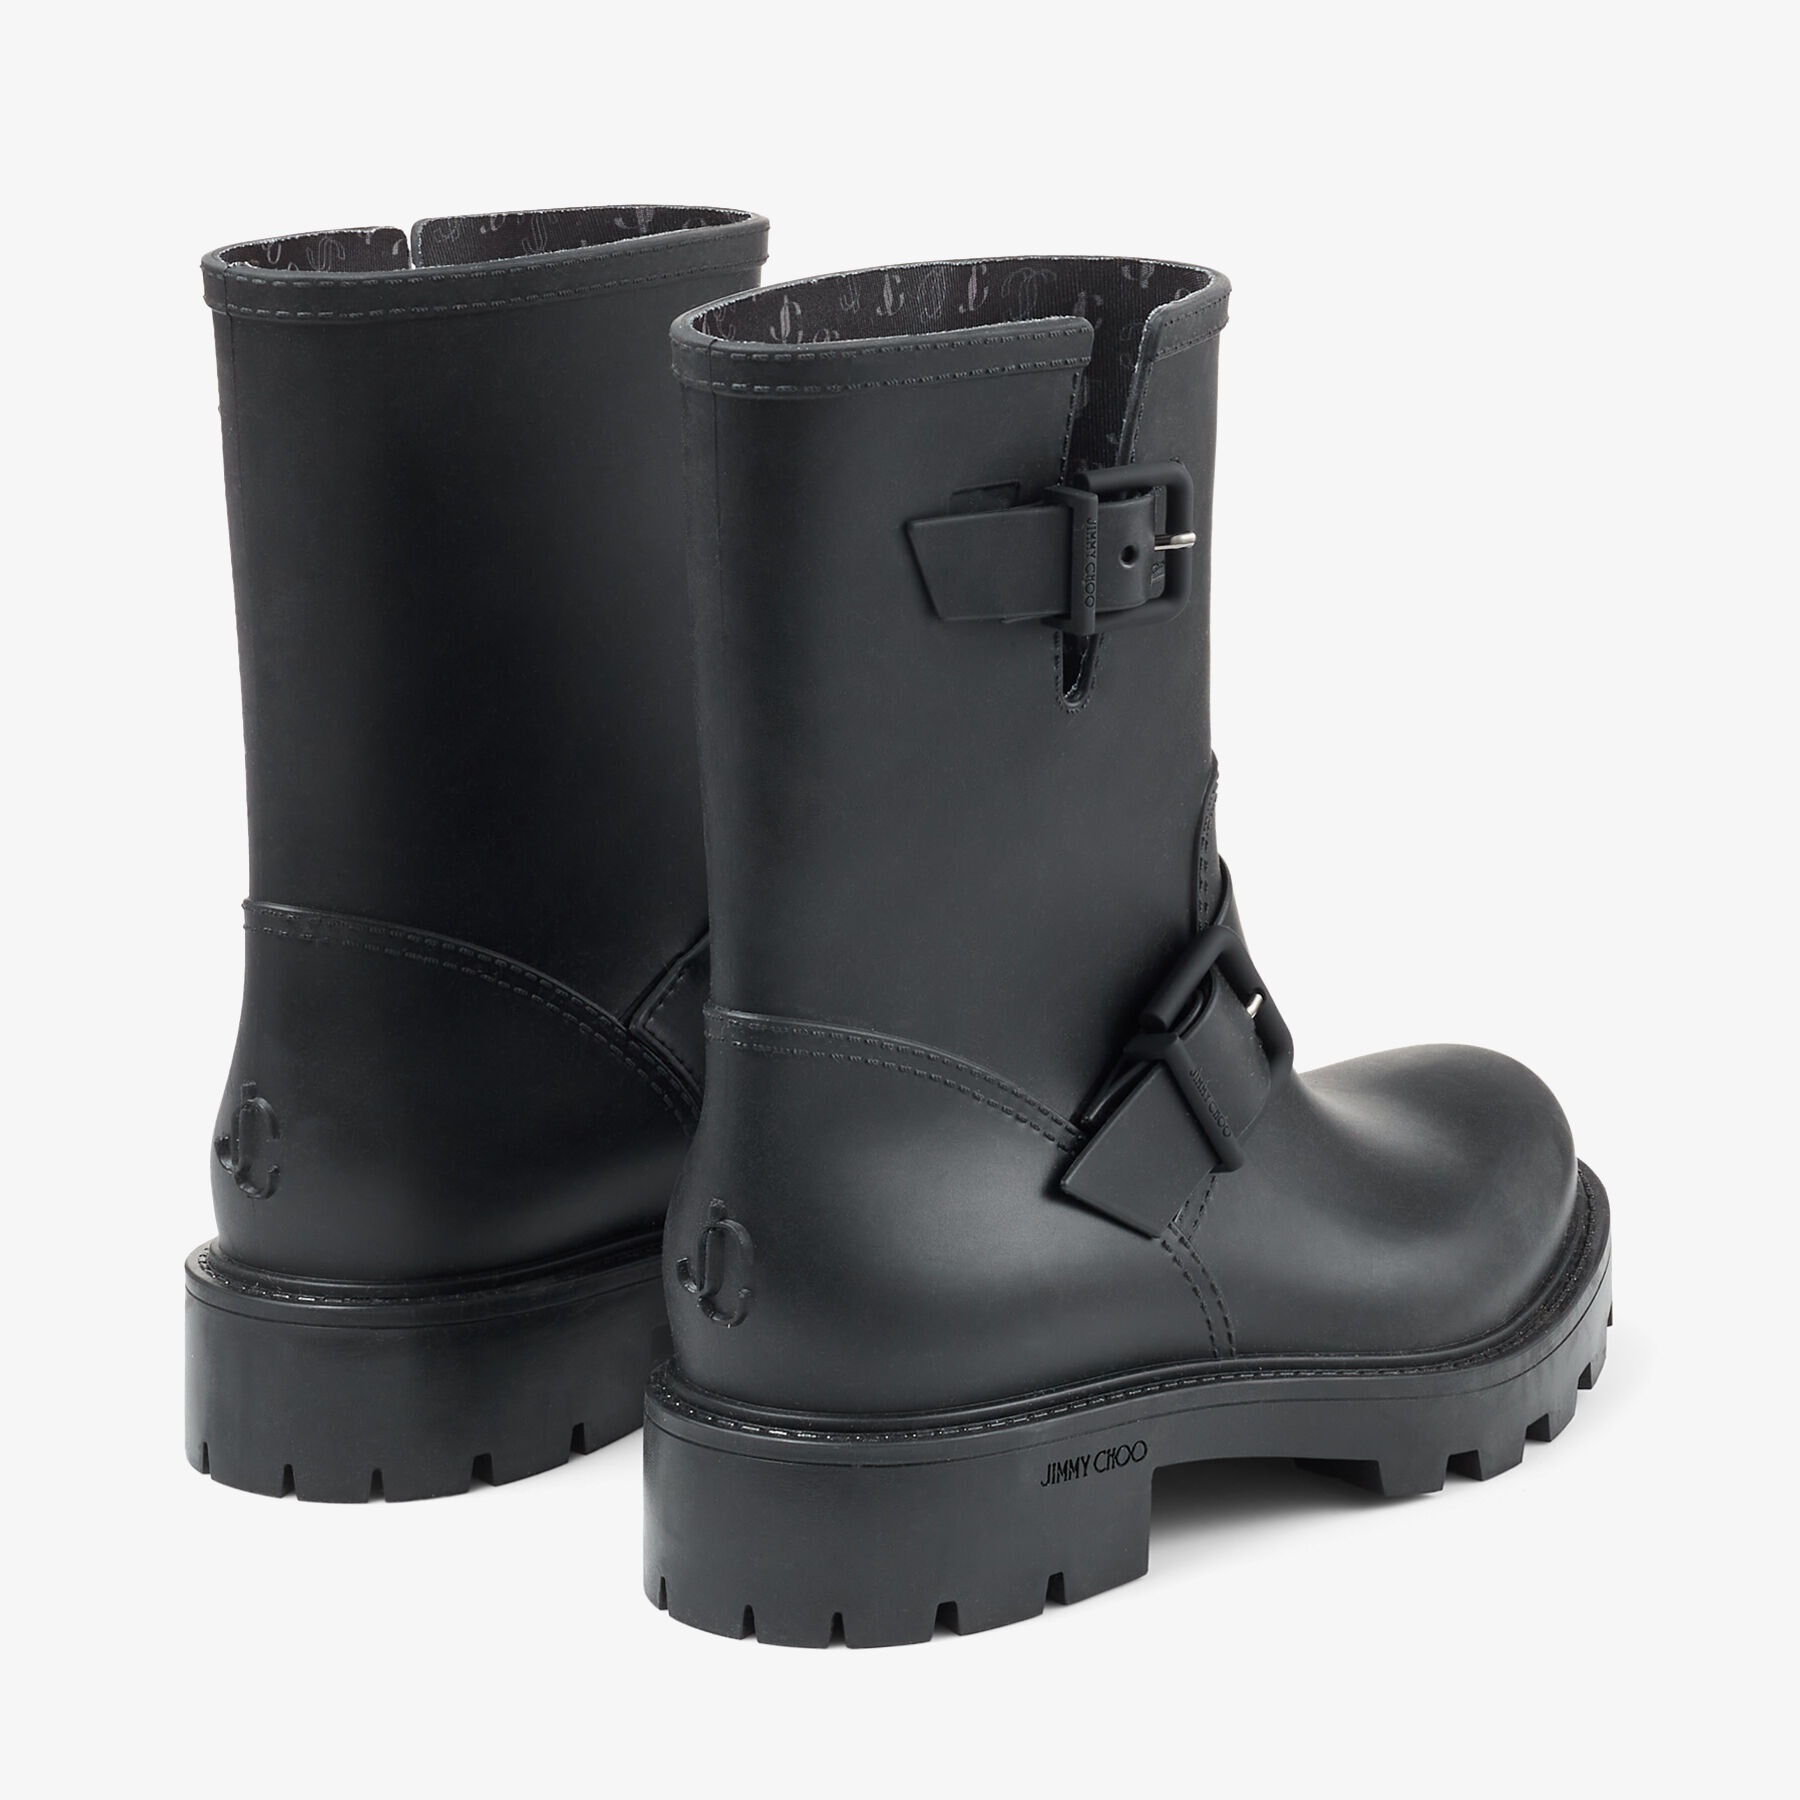 Yael Flat
Black Biodegradable Rubber Rain Boots - 5